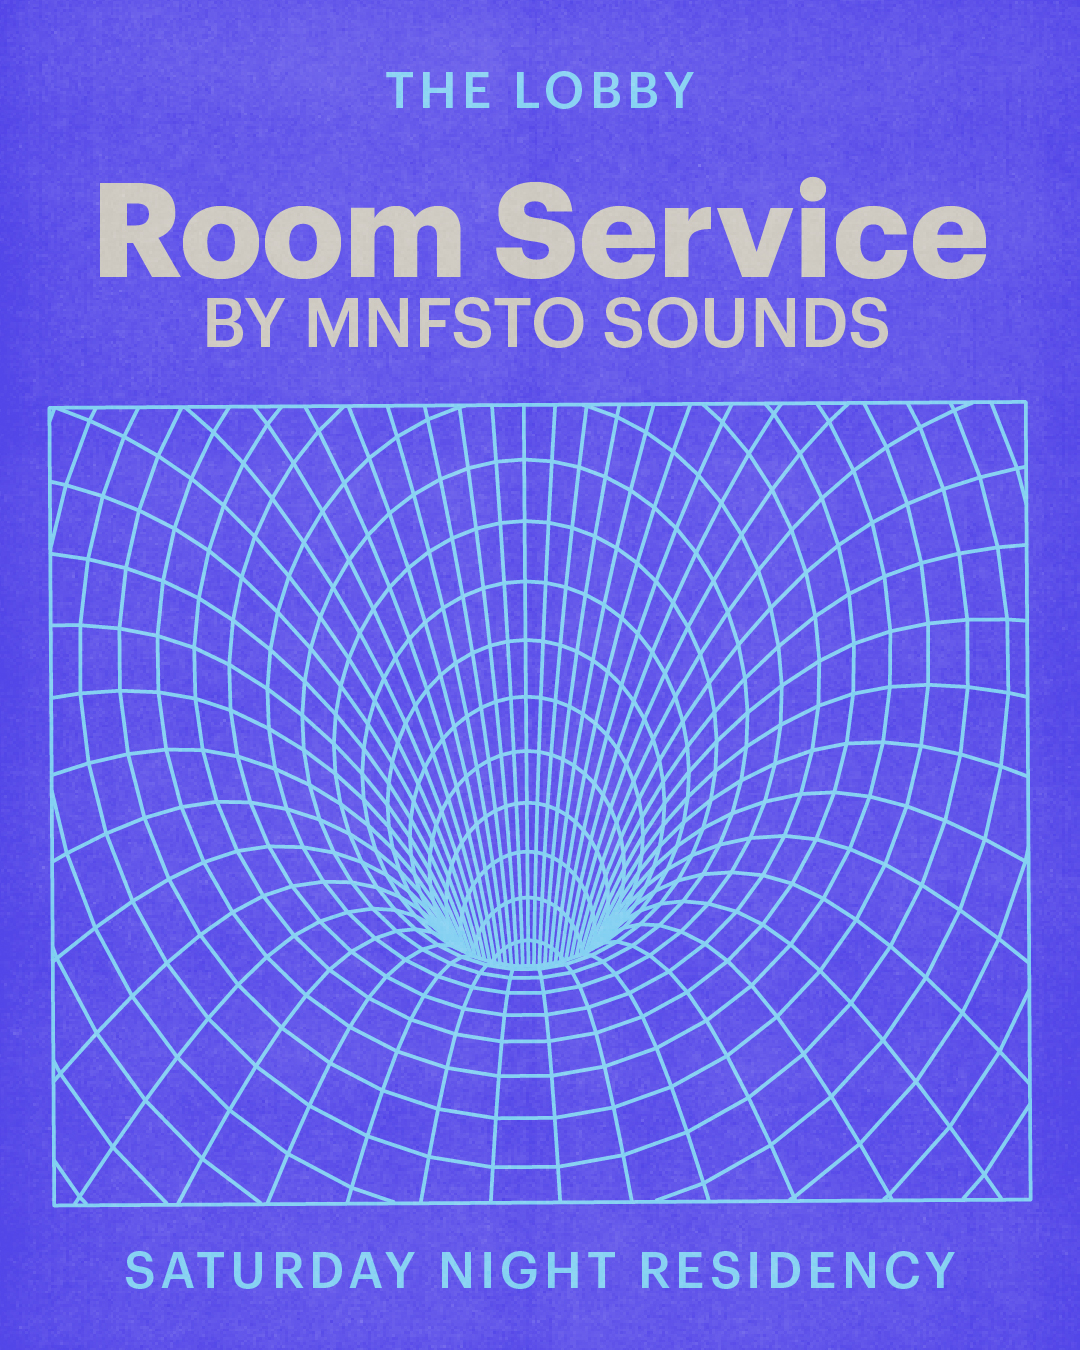 Room Service promo